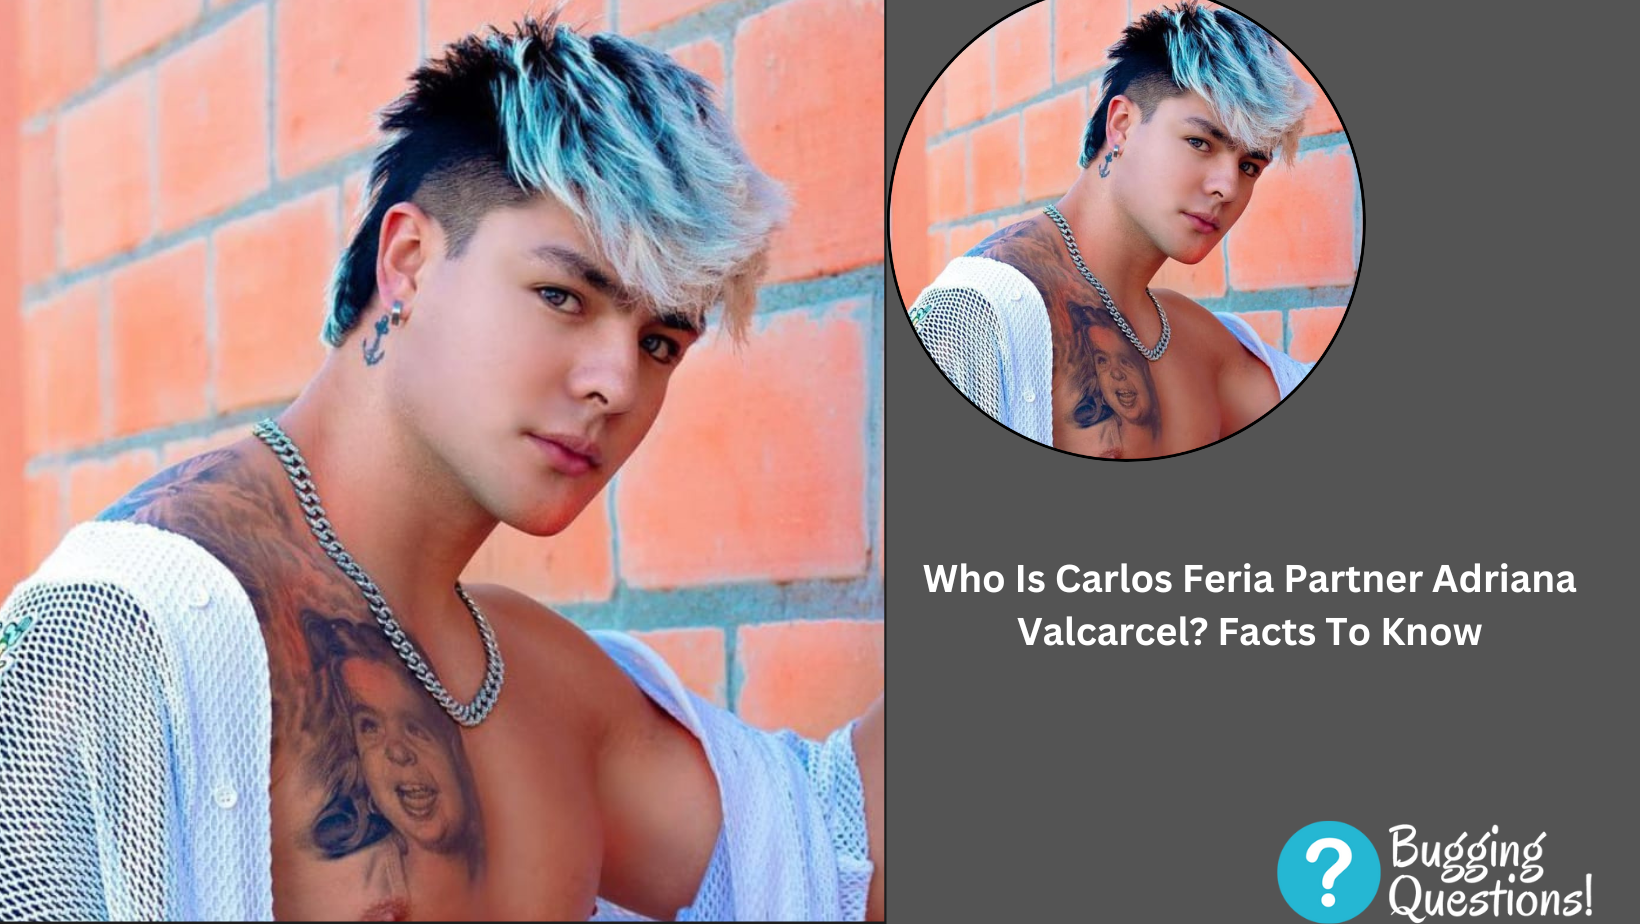 Who Is Carlos Feria Partner Adriana Valcarcel?